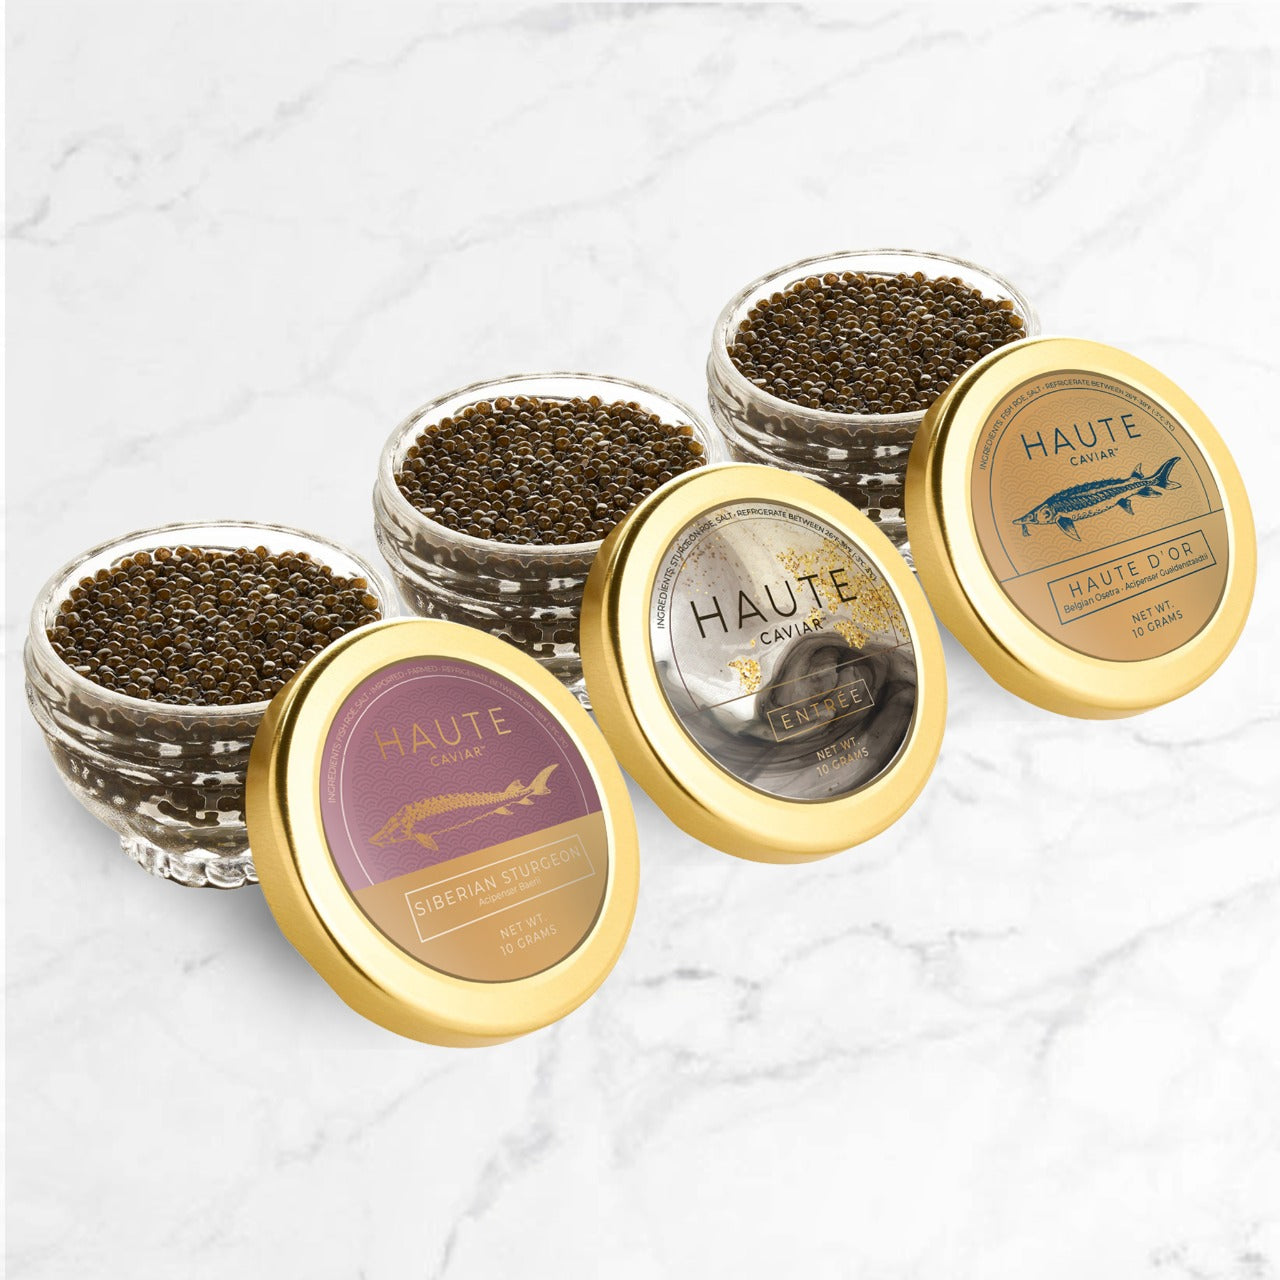 Caviar Degustation Set - Haute Caviar Company 